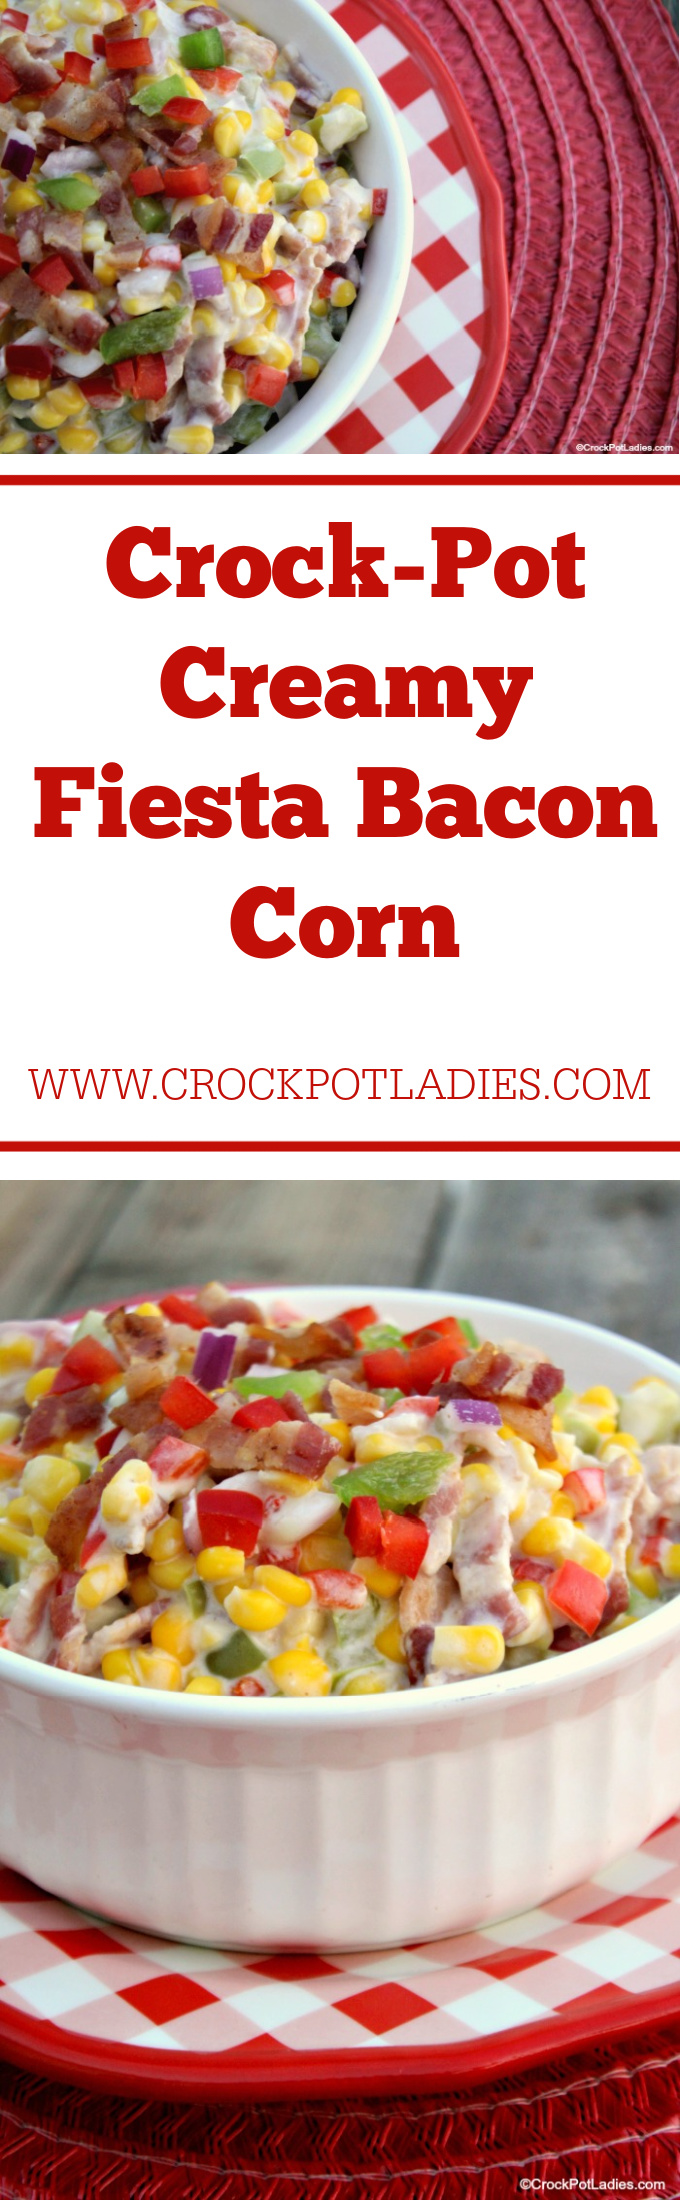 Crock-Pot Creamy Fiesta Bacon Corn